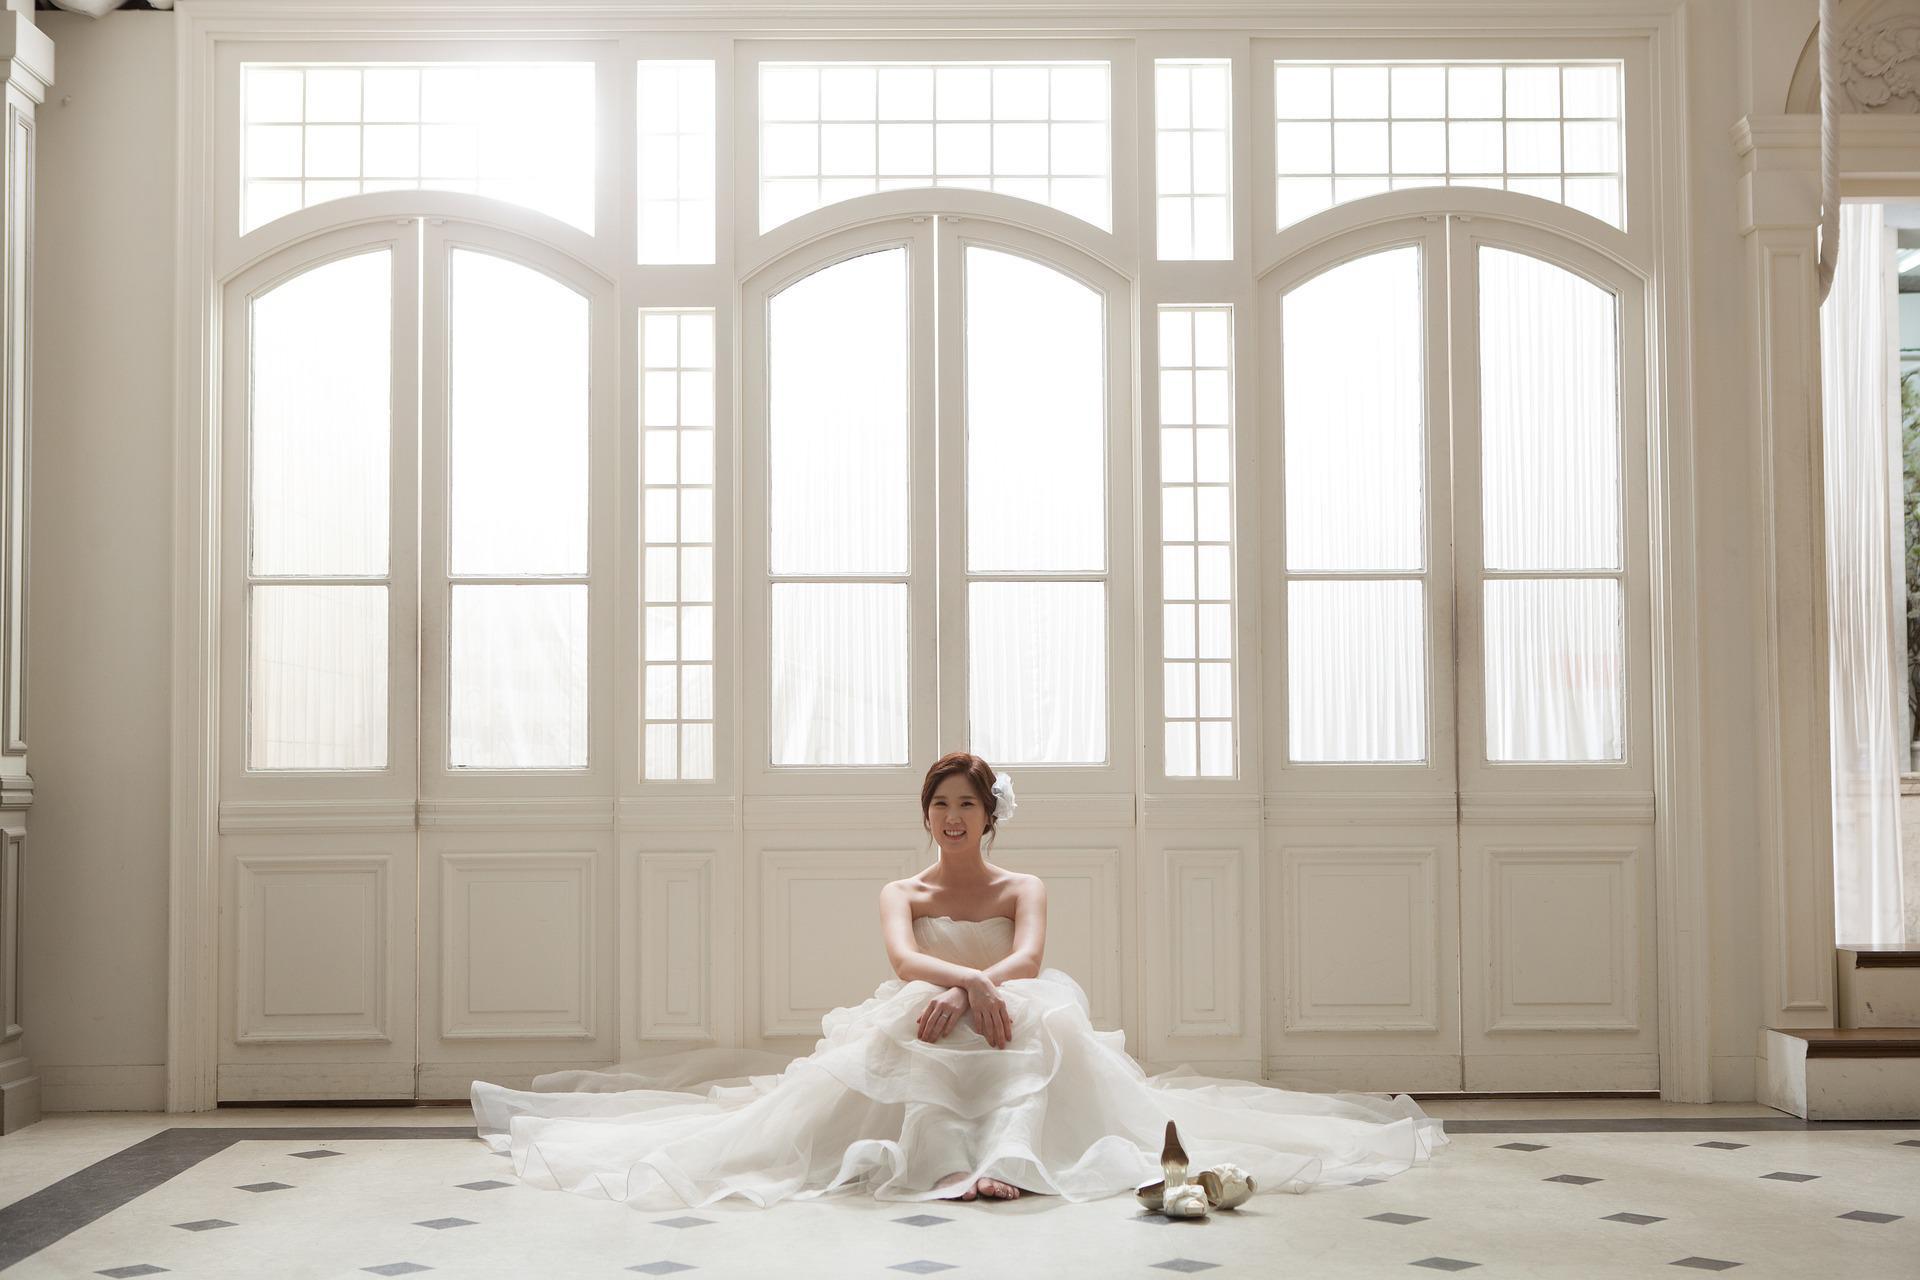 Recently married bride sitting on floor of venue in wedding dress